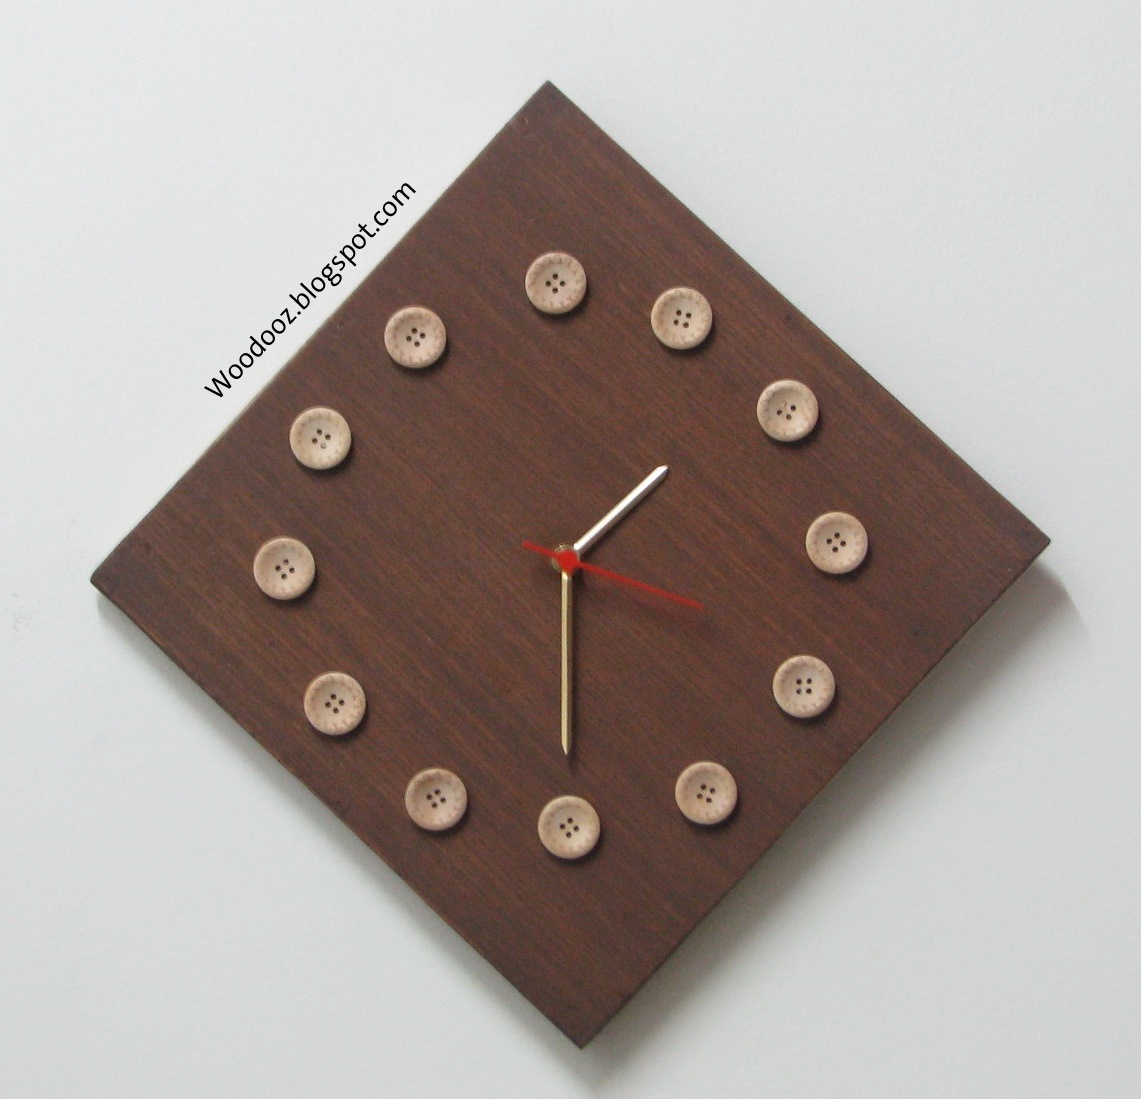 https://blogger.googleusercontent.com/img/b/R29vZ2xl/AVvXsEiywxZVA39HlQ-S4yM9iNFbvbgzsaaHT7mpPi0cMOYjApwyata9B2EIY4bWD3TMBm54KvDPmHMVsoH8pQ9aWhoDX219JxKx0XtlUhHQhBovTlHod0WTQGGEKrae9E1etLyudj7whhhoxvM/s1600/Wooden+DIY+Wall+Clock.JPG